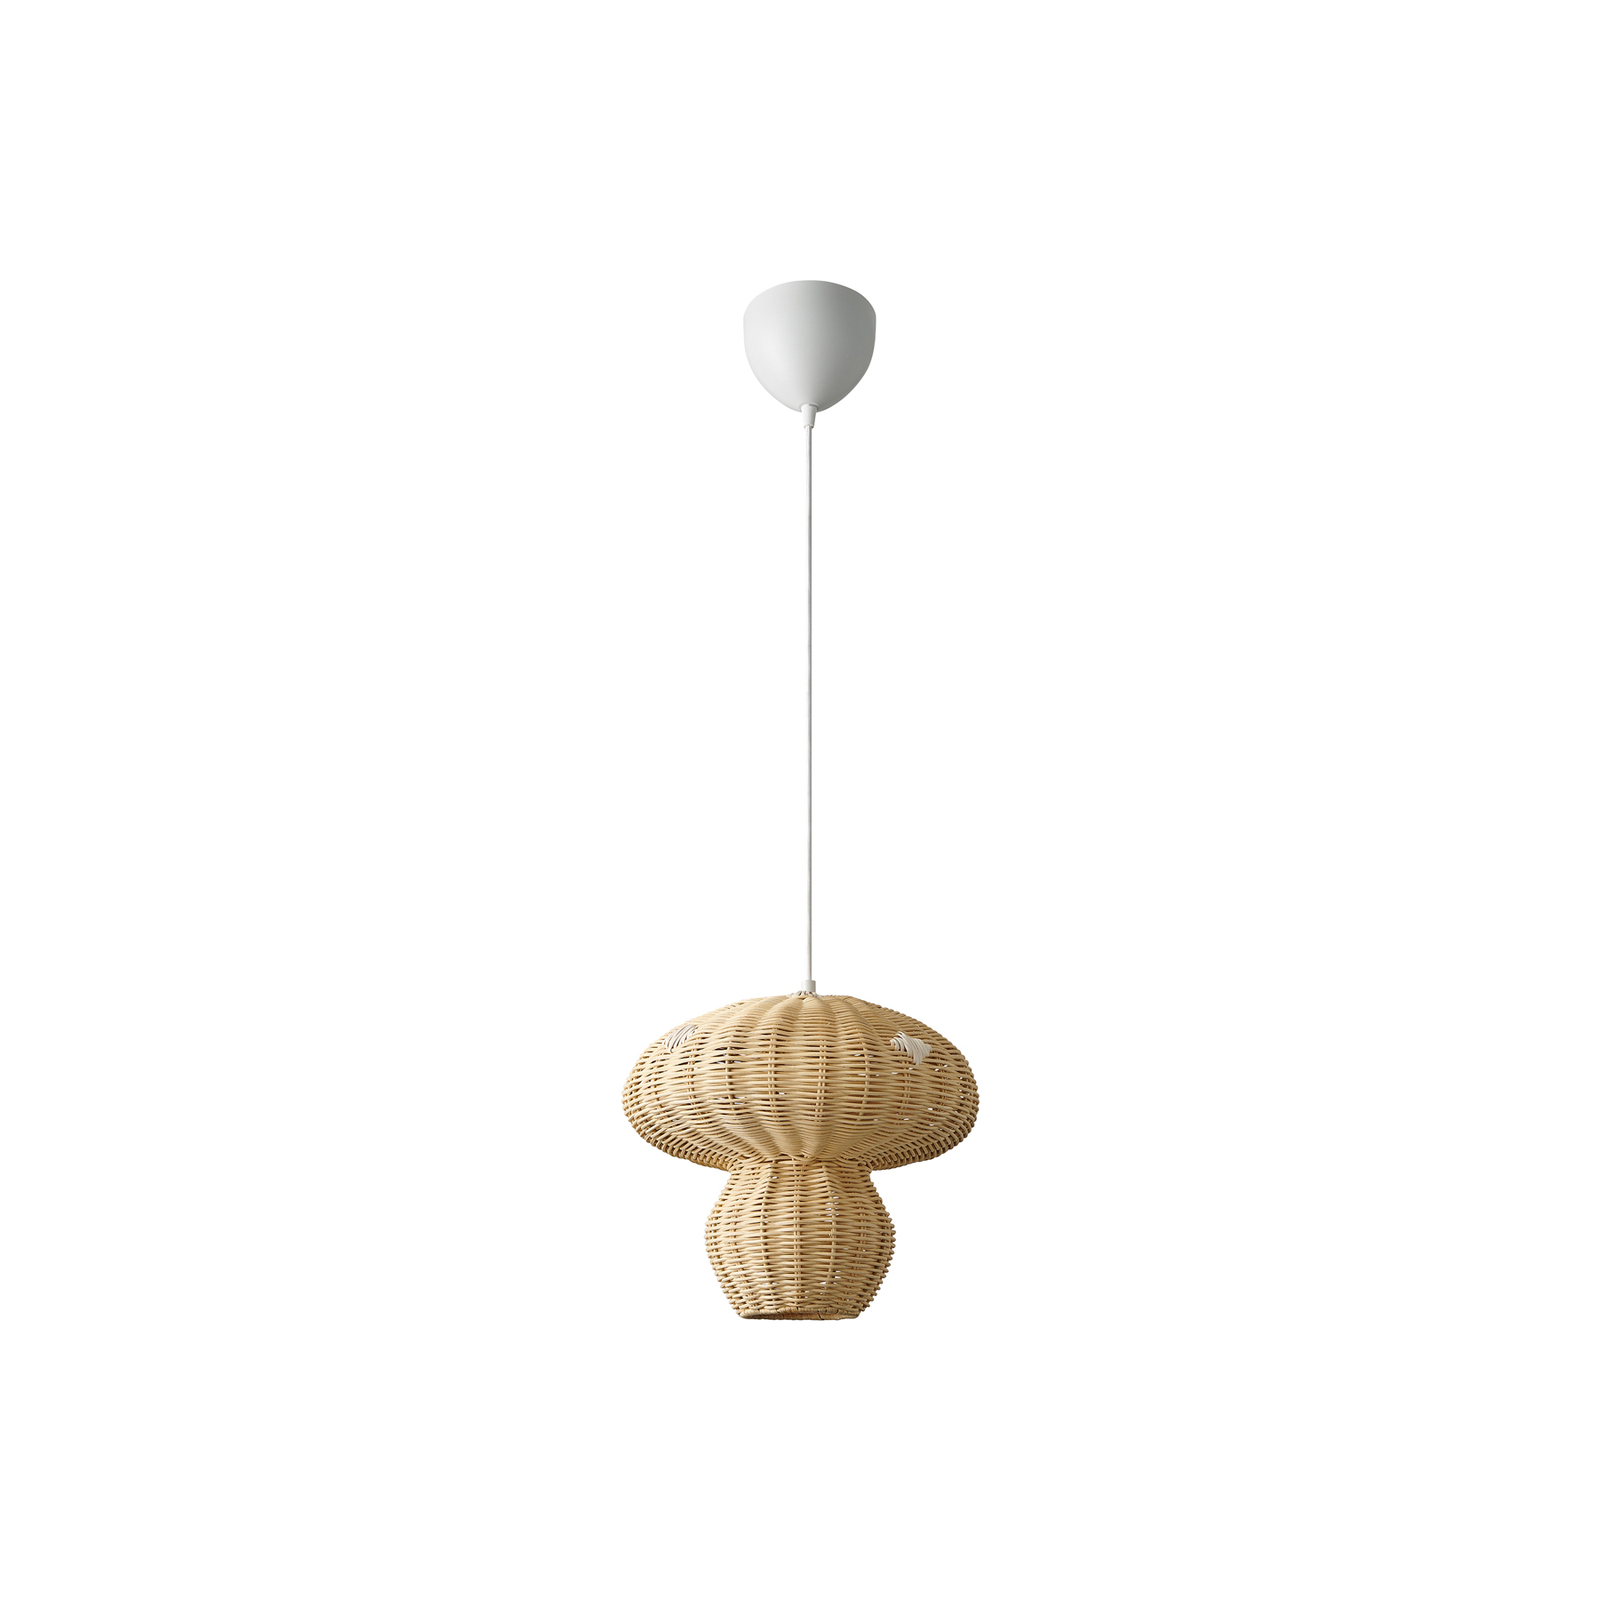 Allie pendant light, rattan, mushroom shape, natural brown